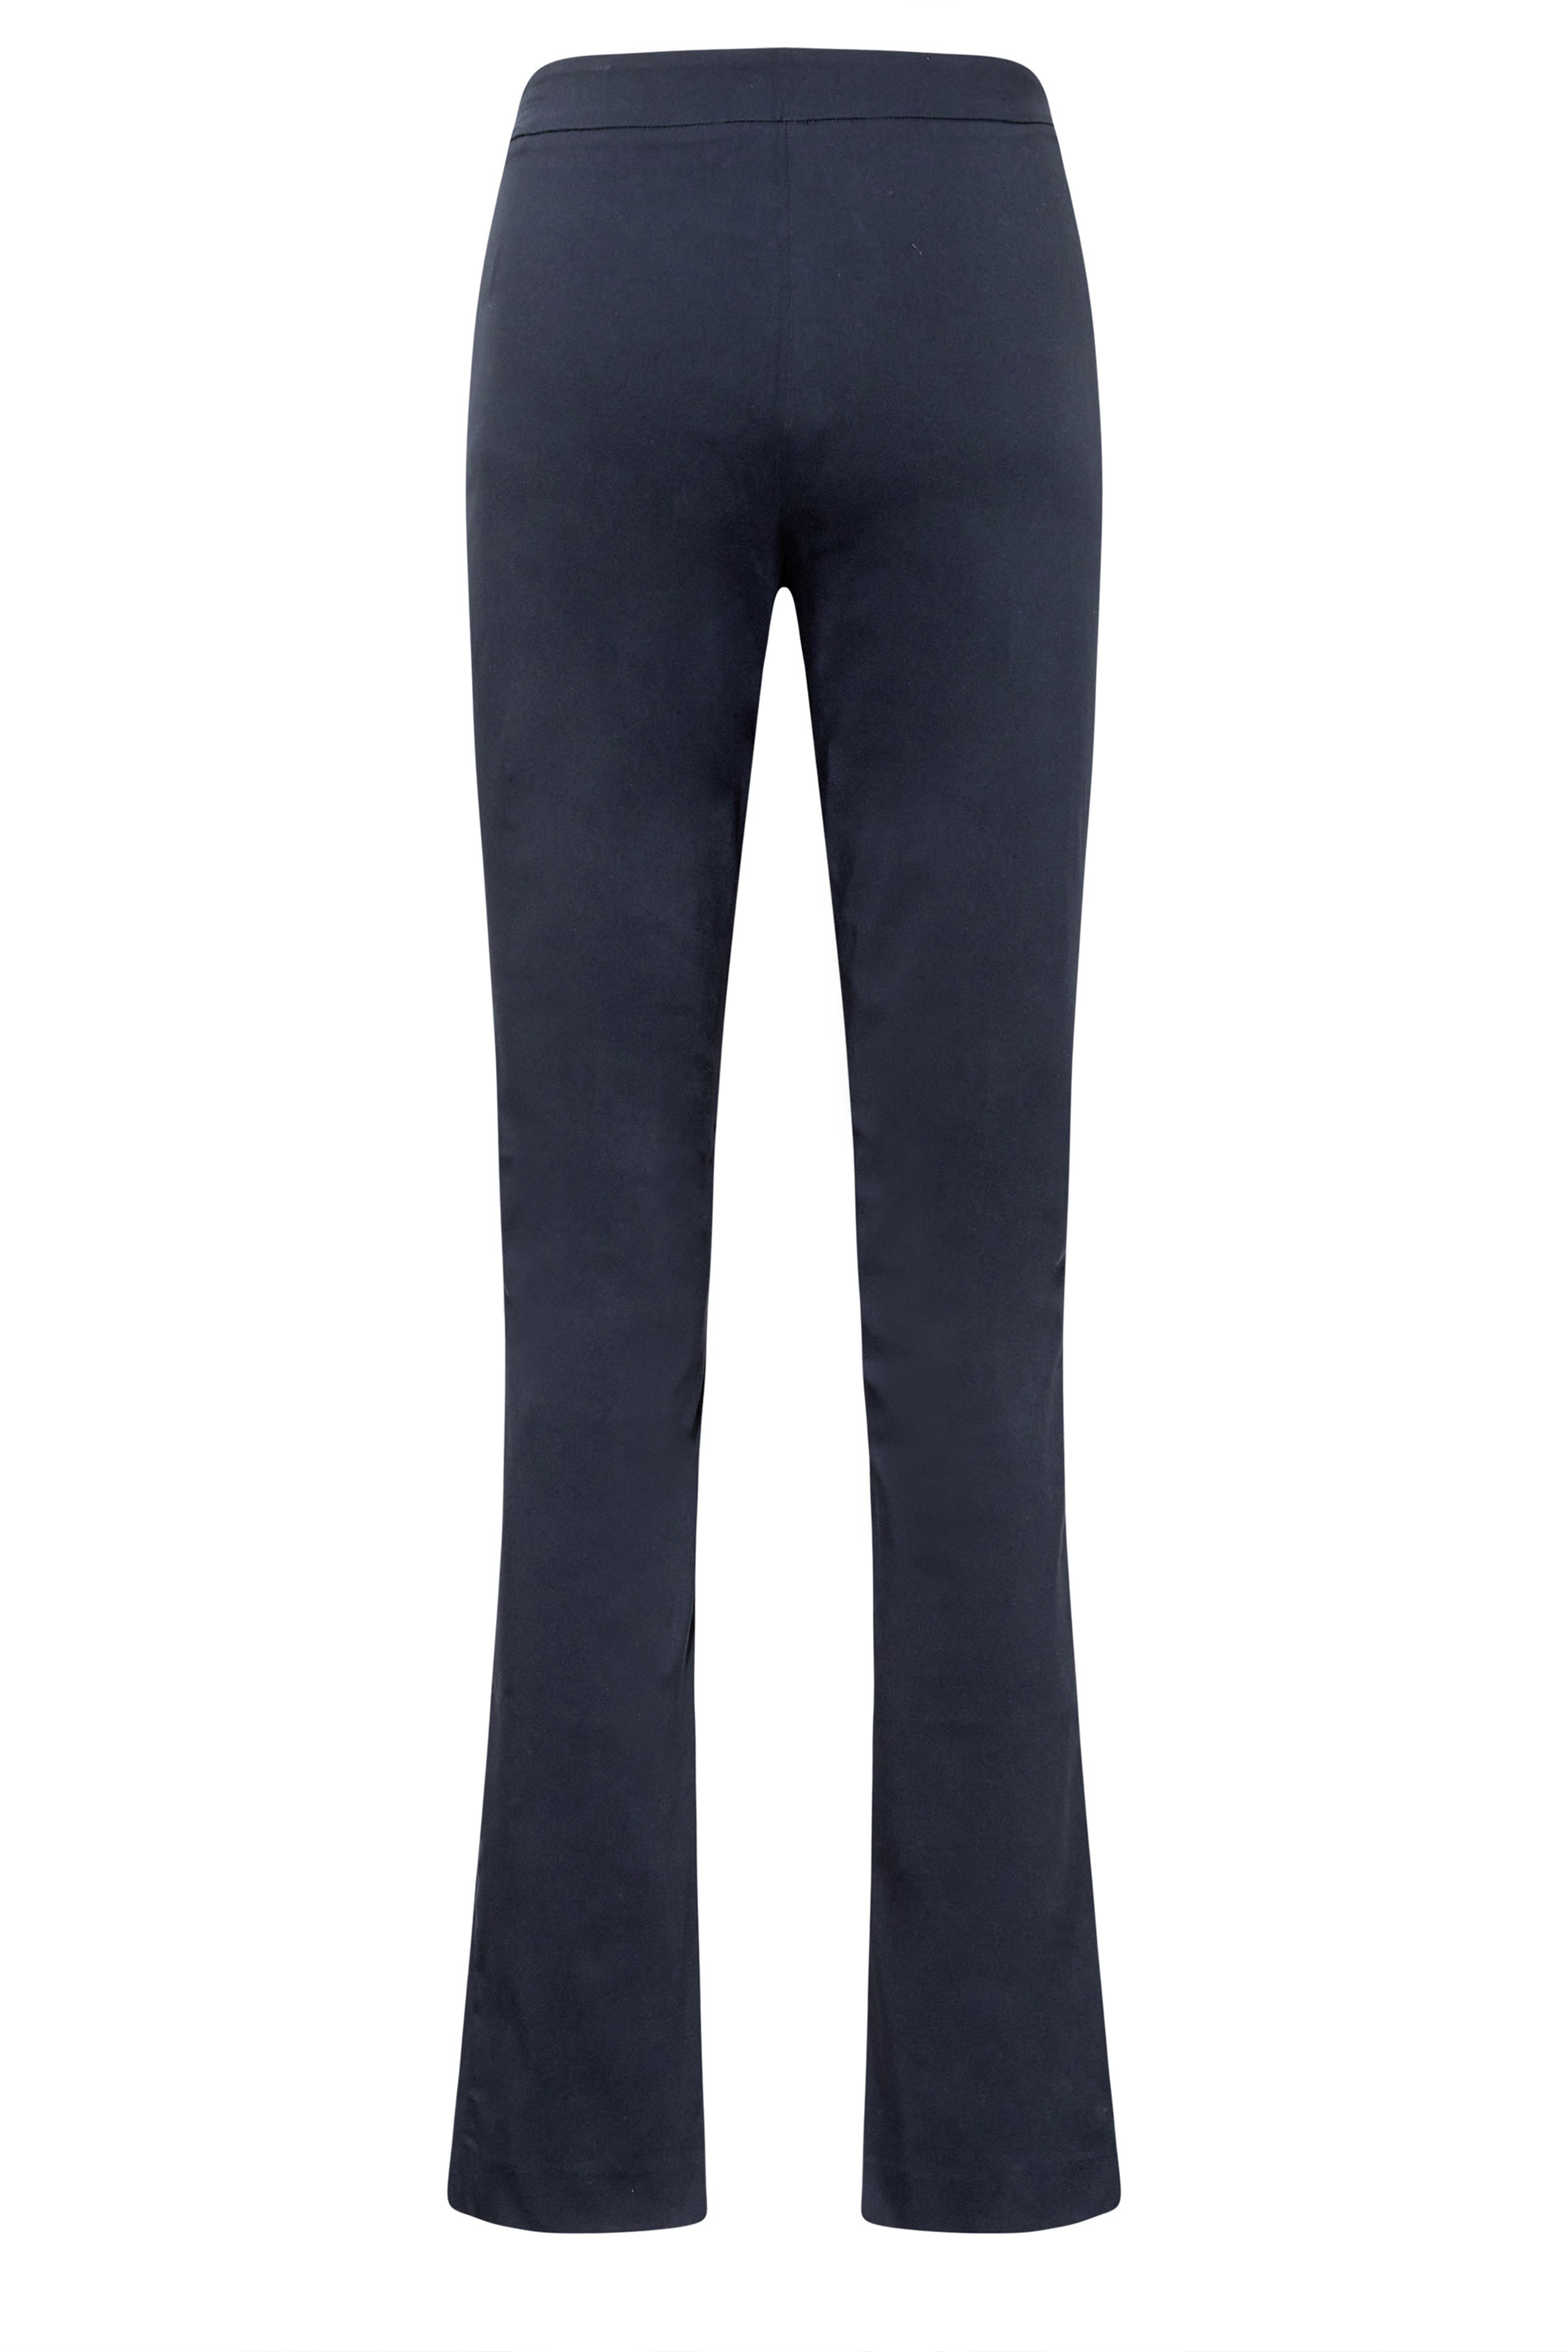 Spring and Autumn 2023 New Women's Pants High Waist Stretch Straight  Trousers Gray Black Navy Blue Slacks - AliExpress